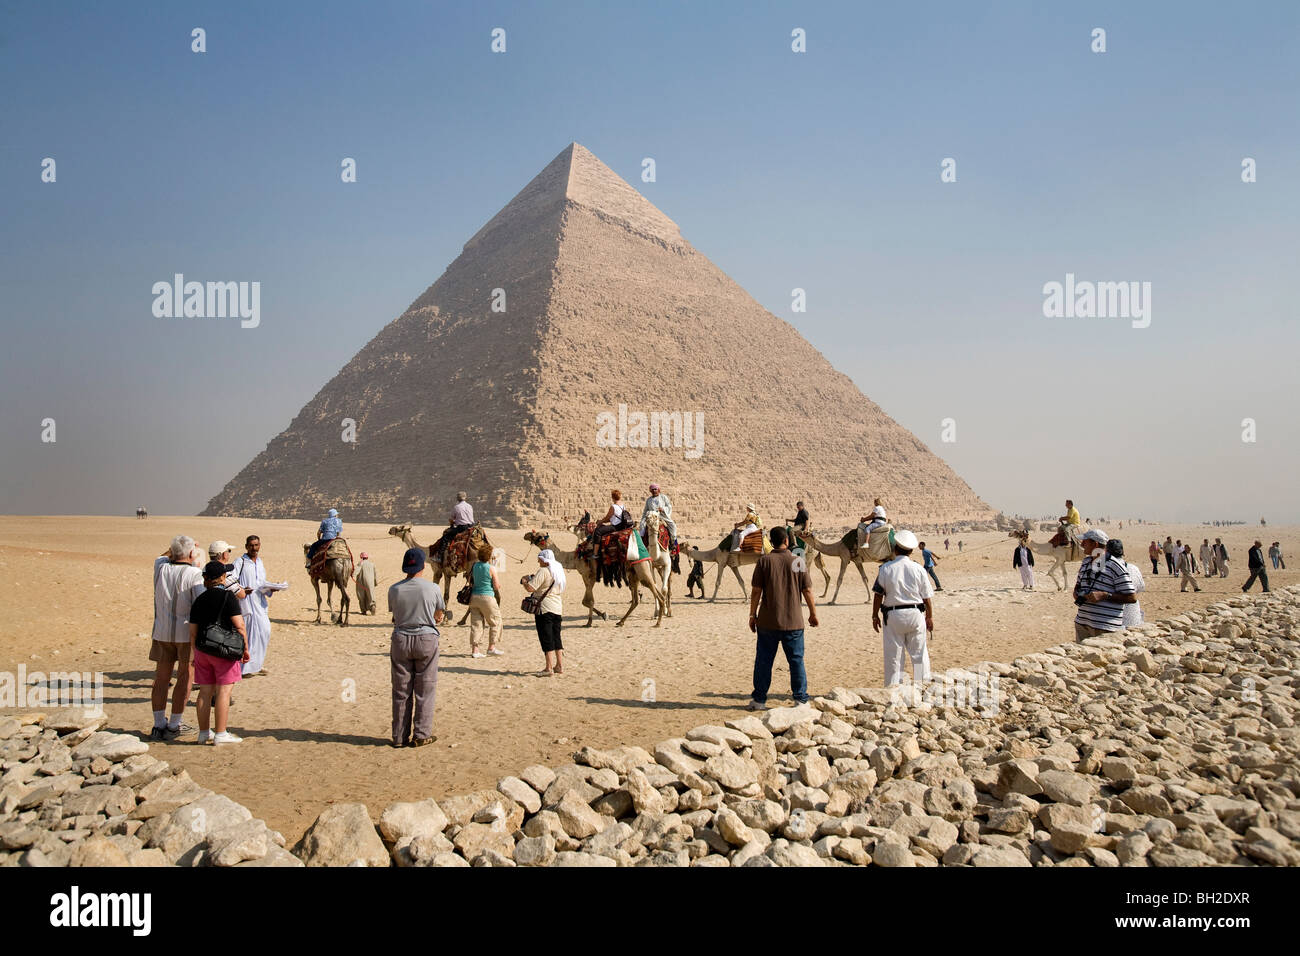 Куча пирамид. Туристы Каир пирамиды. Пирамида Хеопса туристы. Египет пирамиды туристы. Пирамиды Гизы туристы.